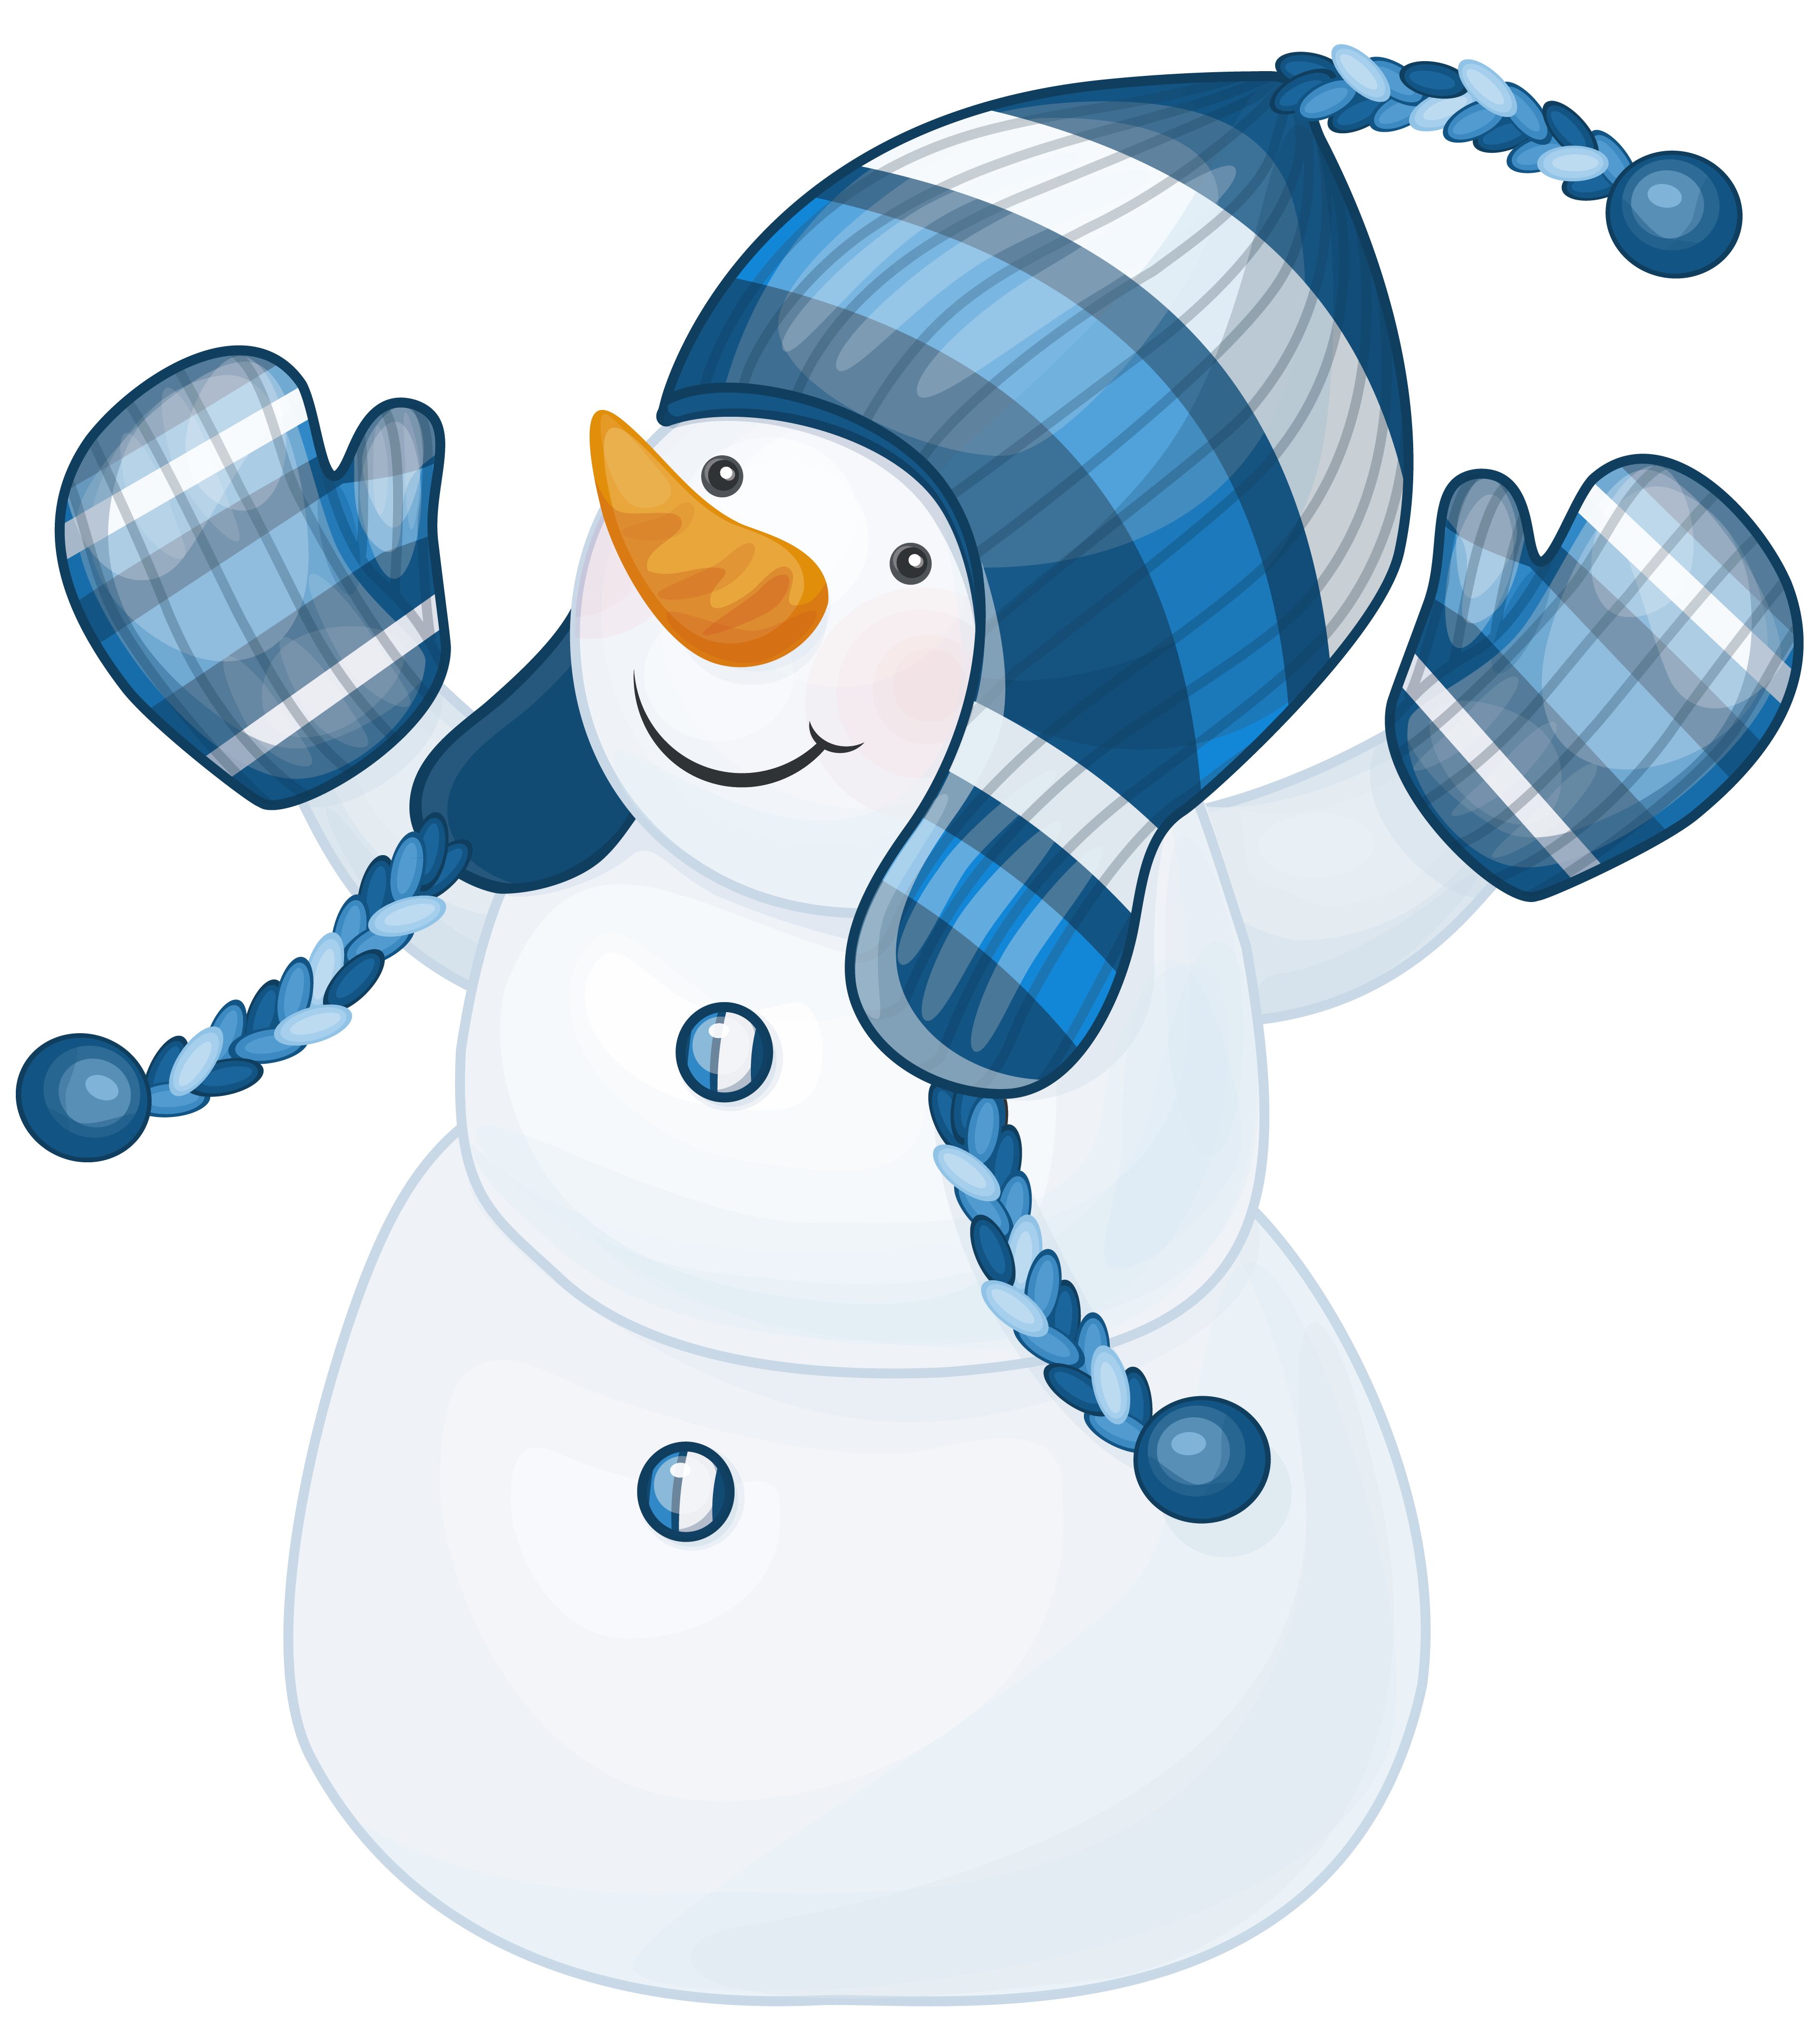 holiday snowman clip art